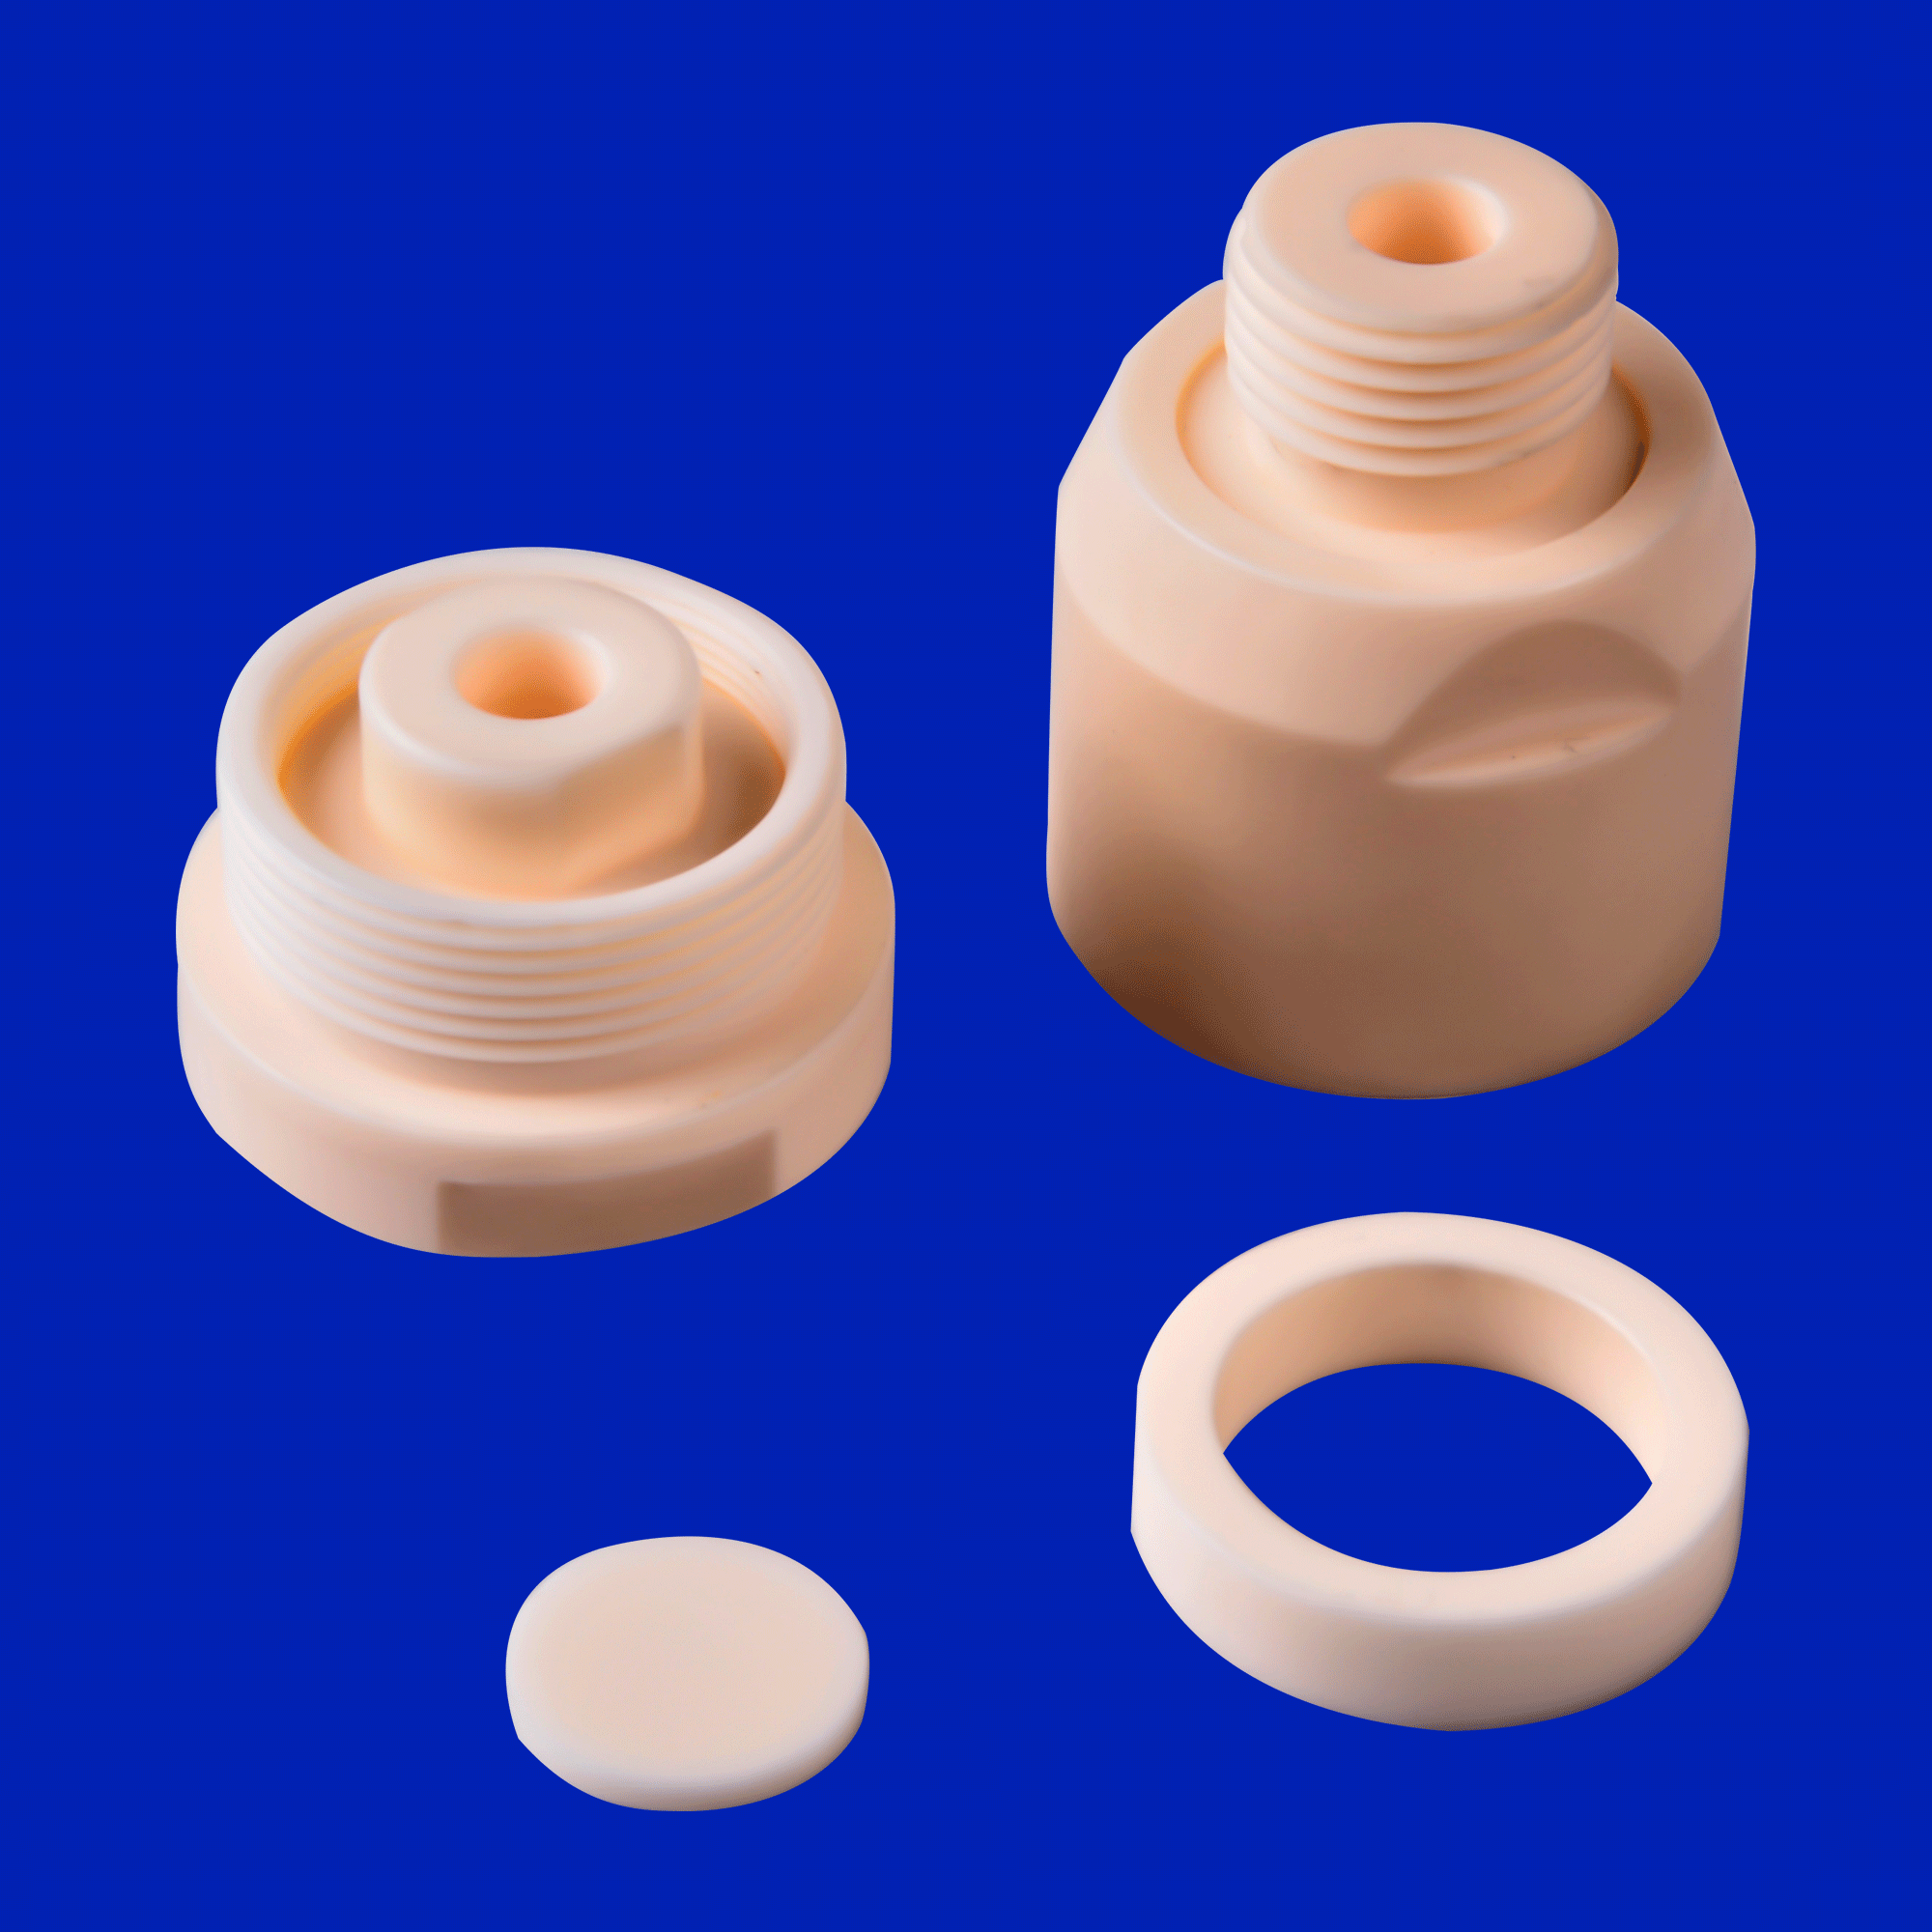 Other 99 Alumina High Wear-Resistant Ceramics